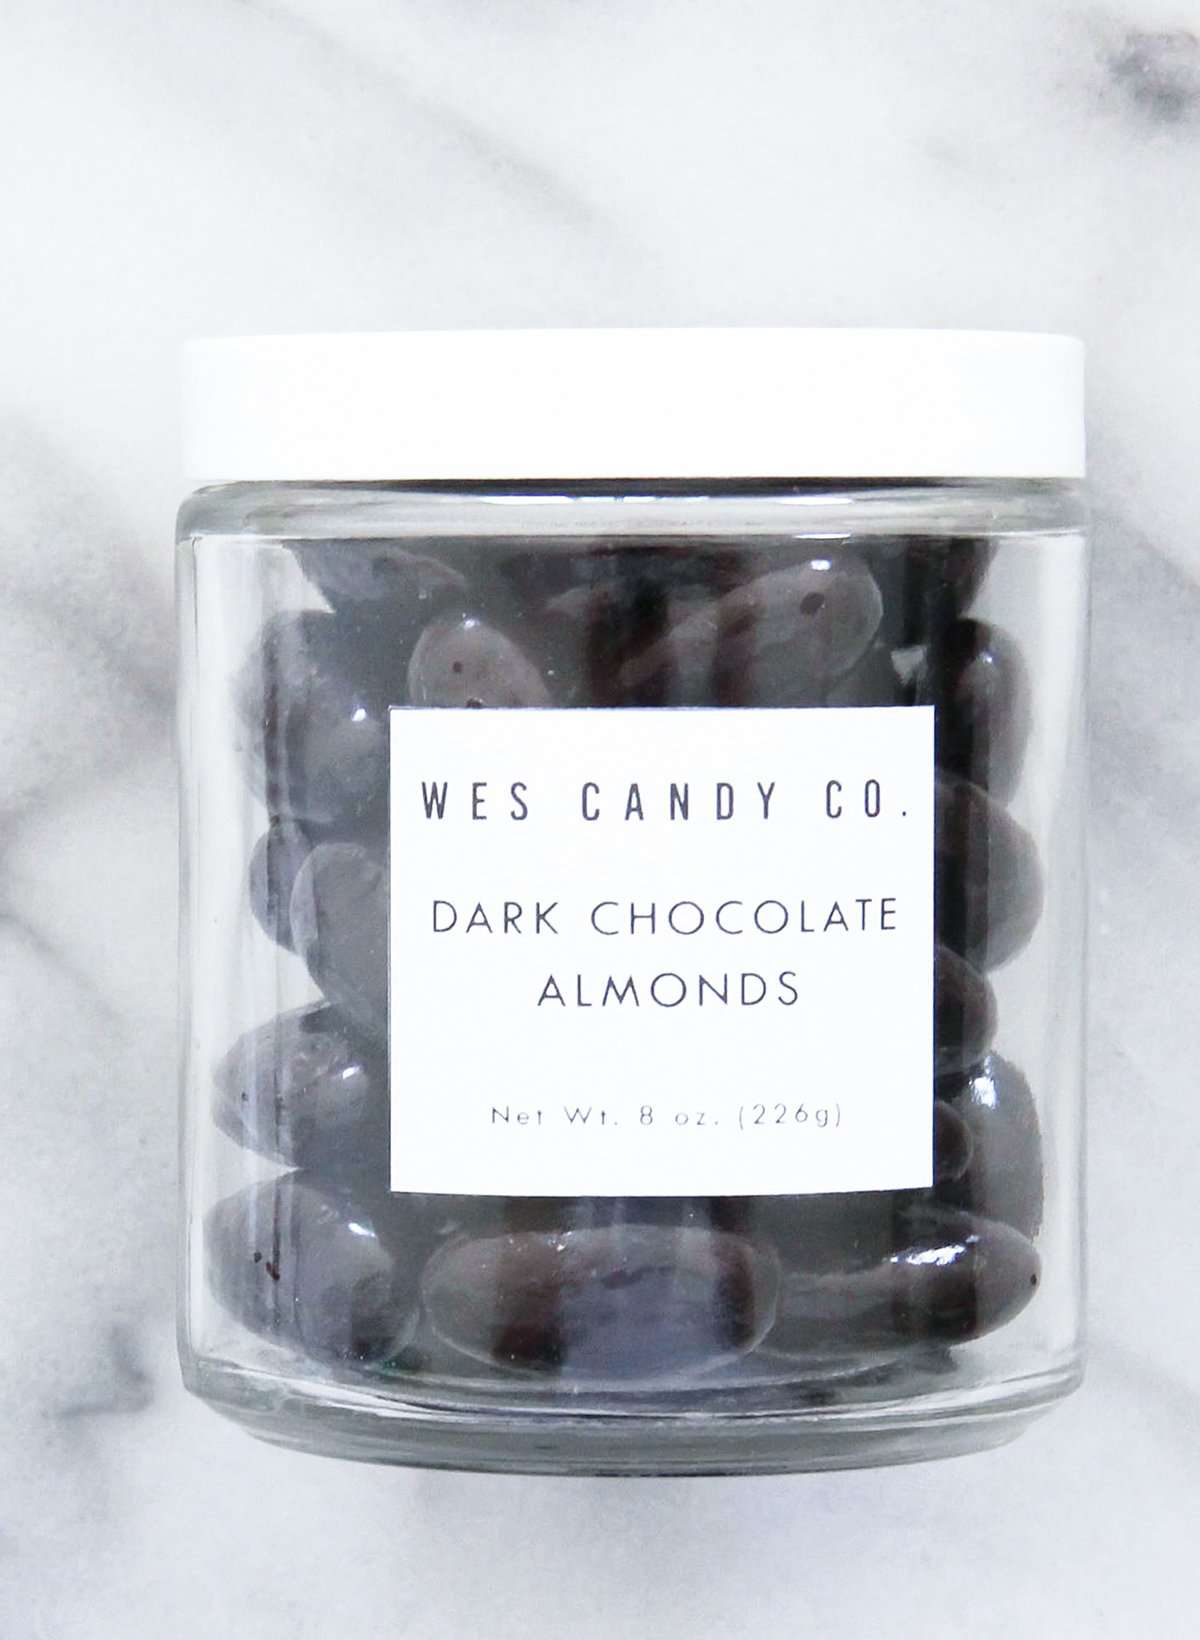 8oz jar dark chocolate covered almonds.